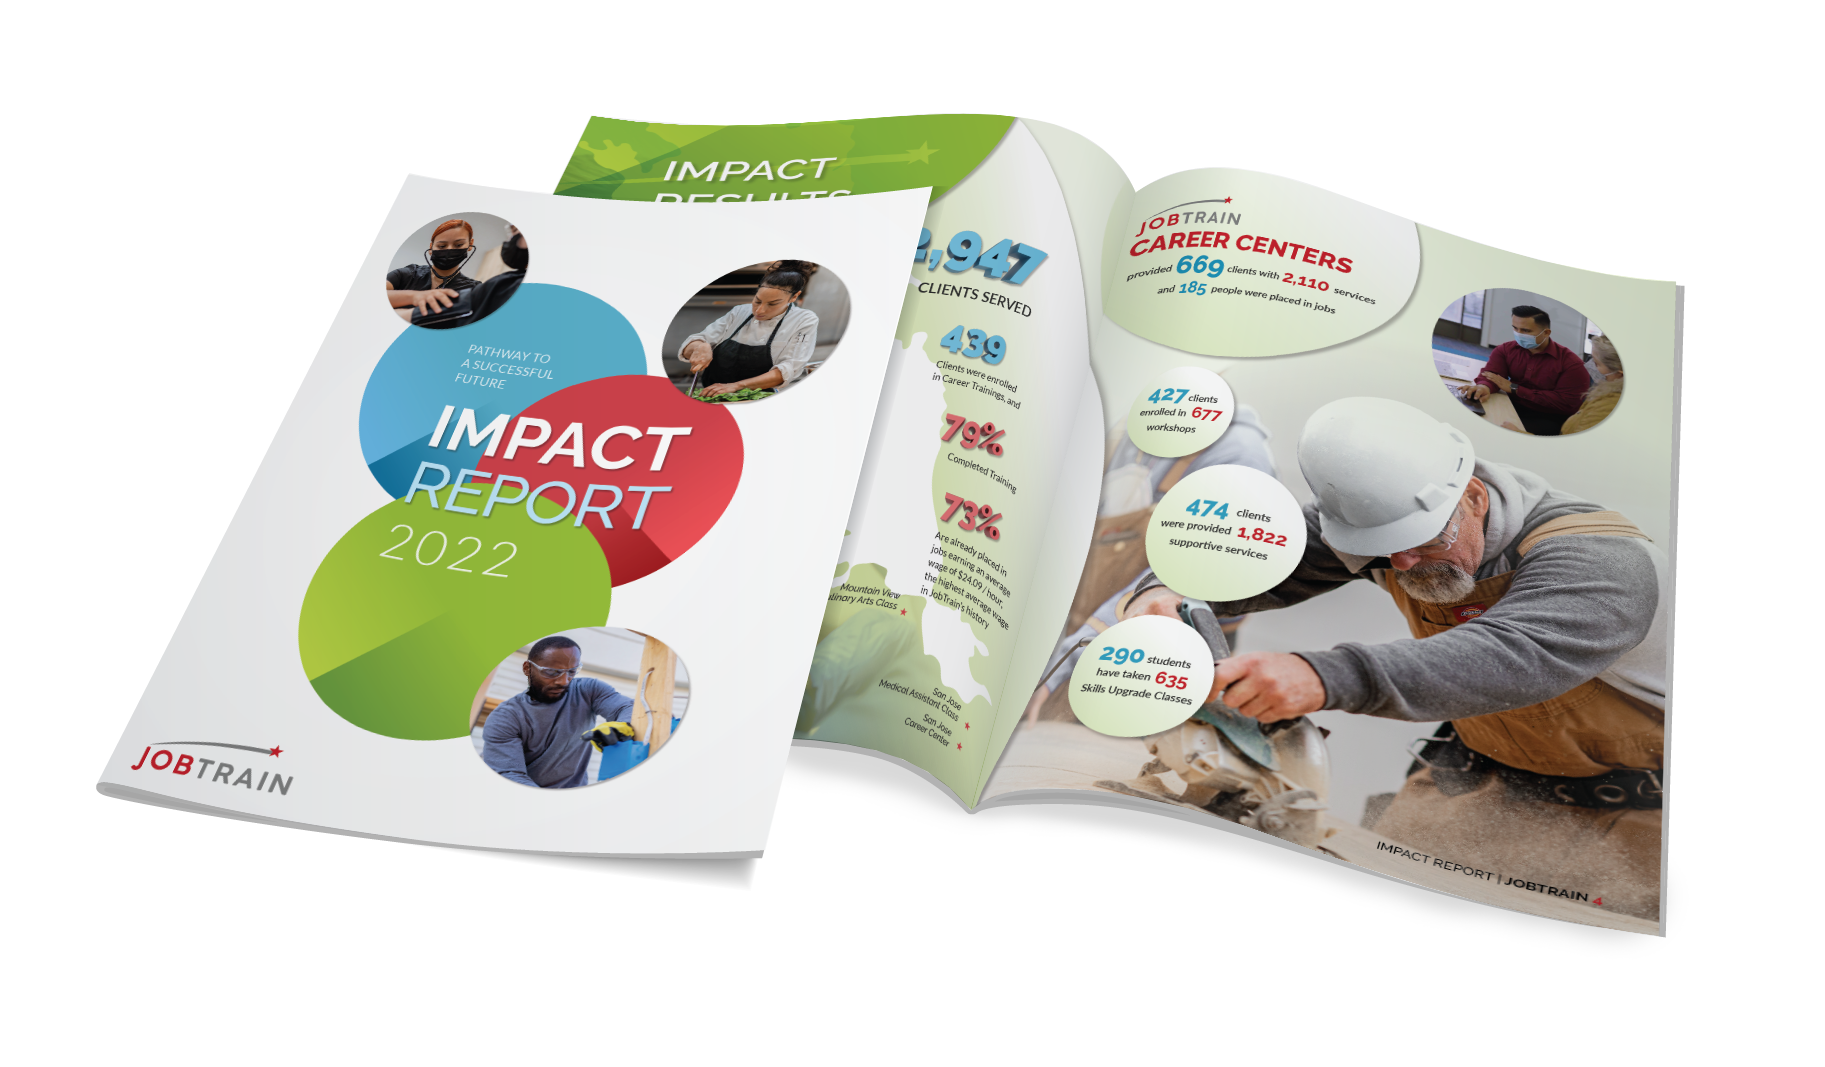 Printed version of JobTrain's Impact Report 2022